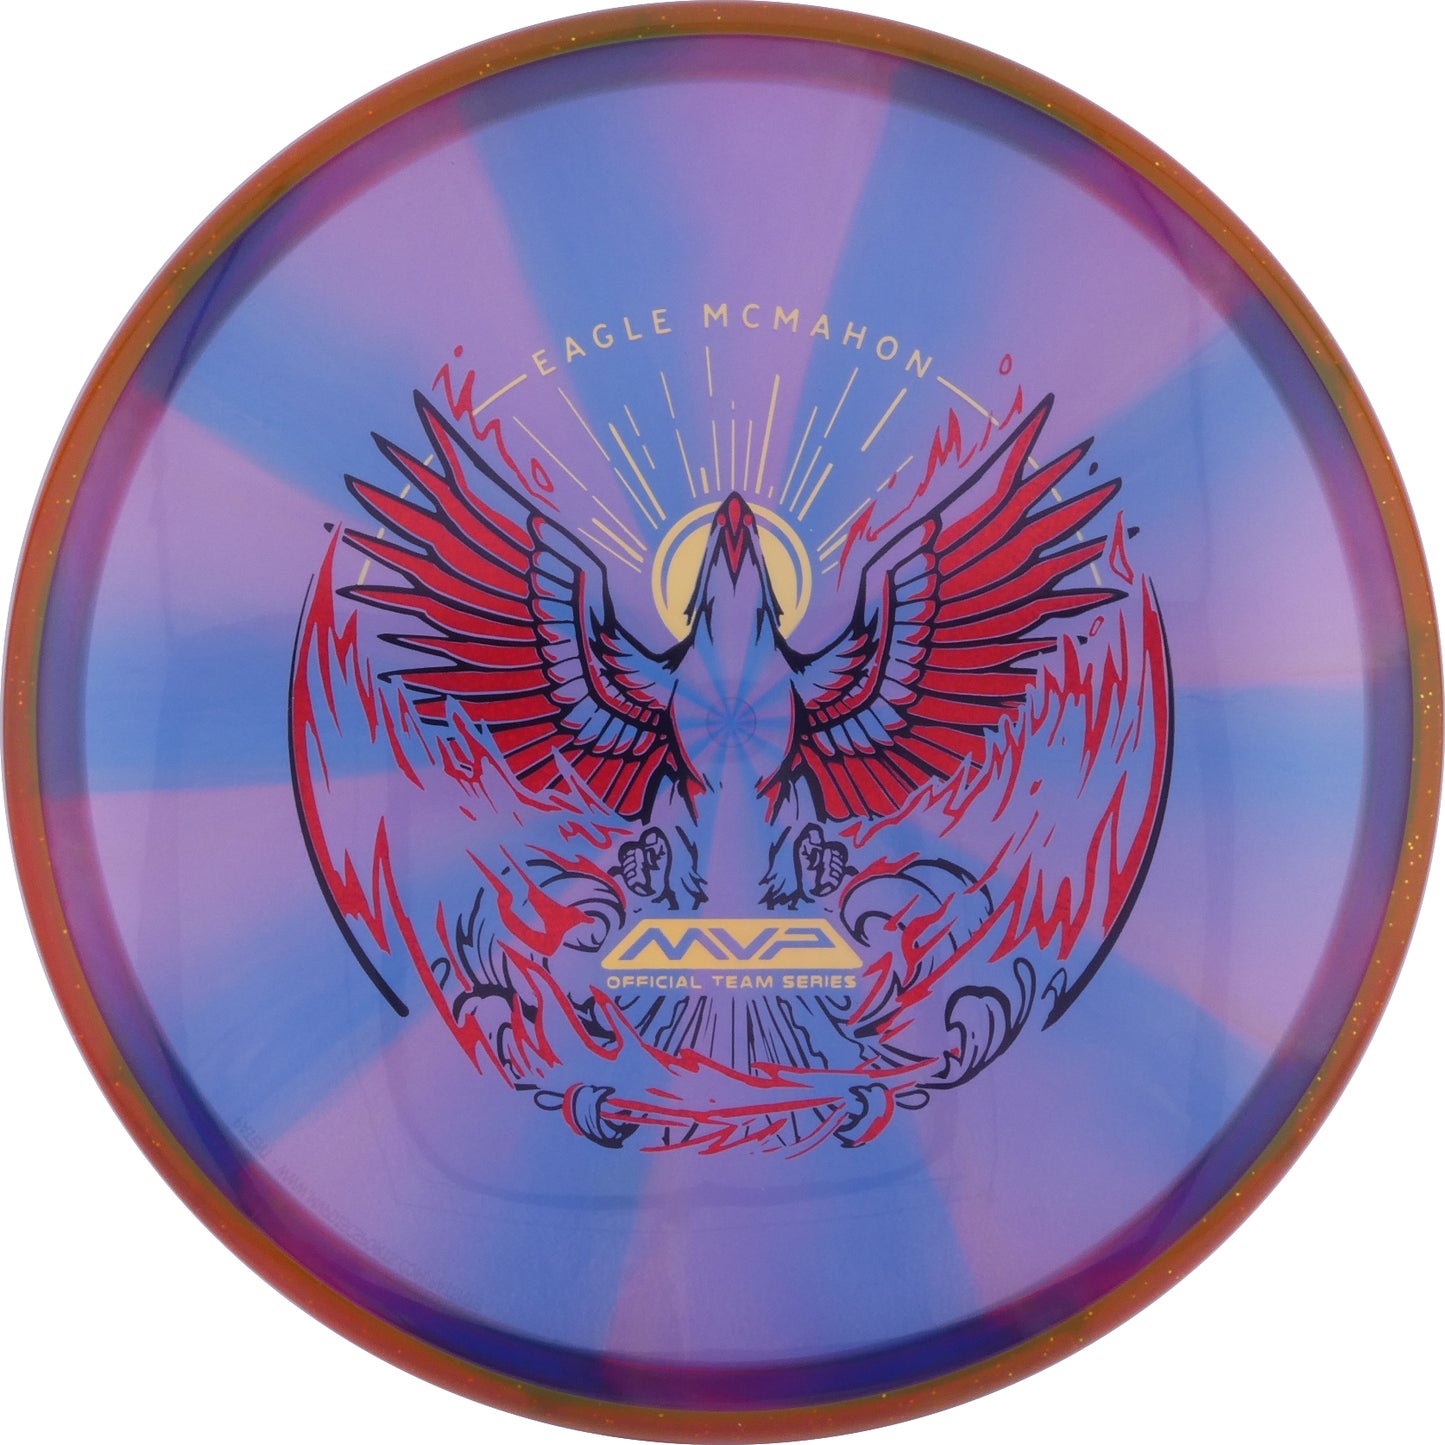 Prism Proton Envy - Rebirth - Eagle McMahon Team Series